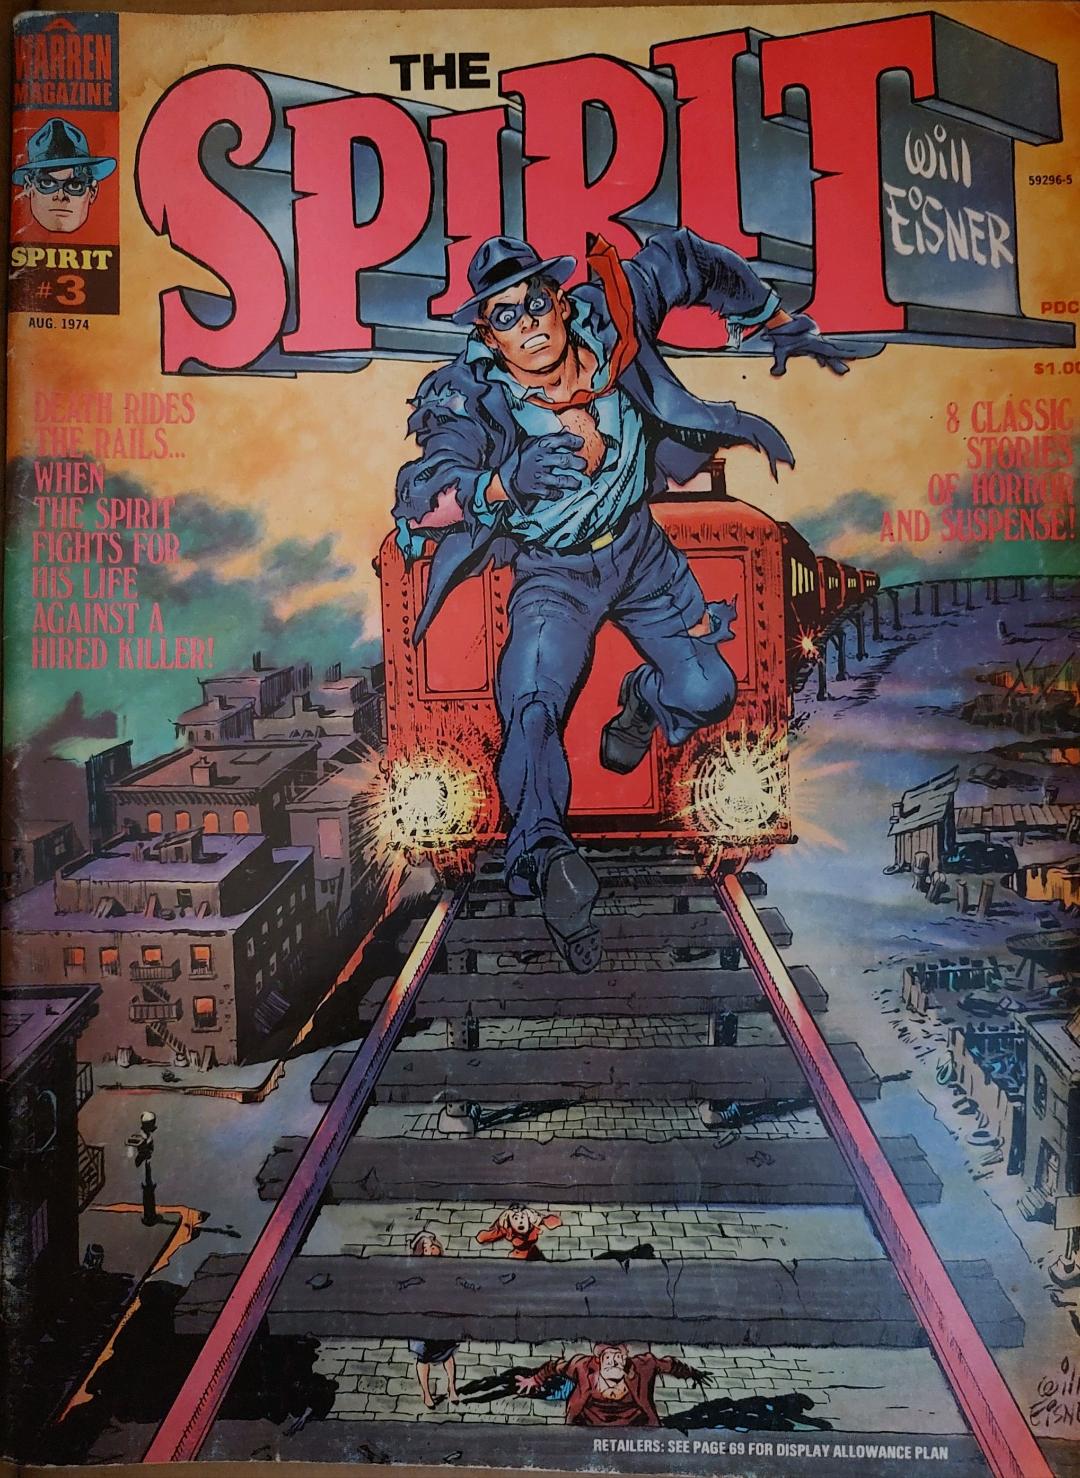 The Spirit #3 Comic Book Magazine